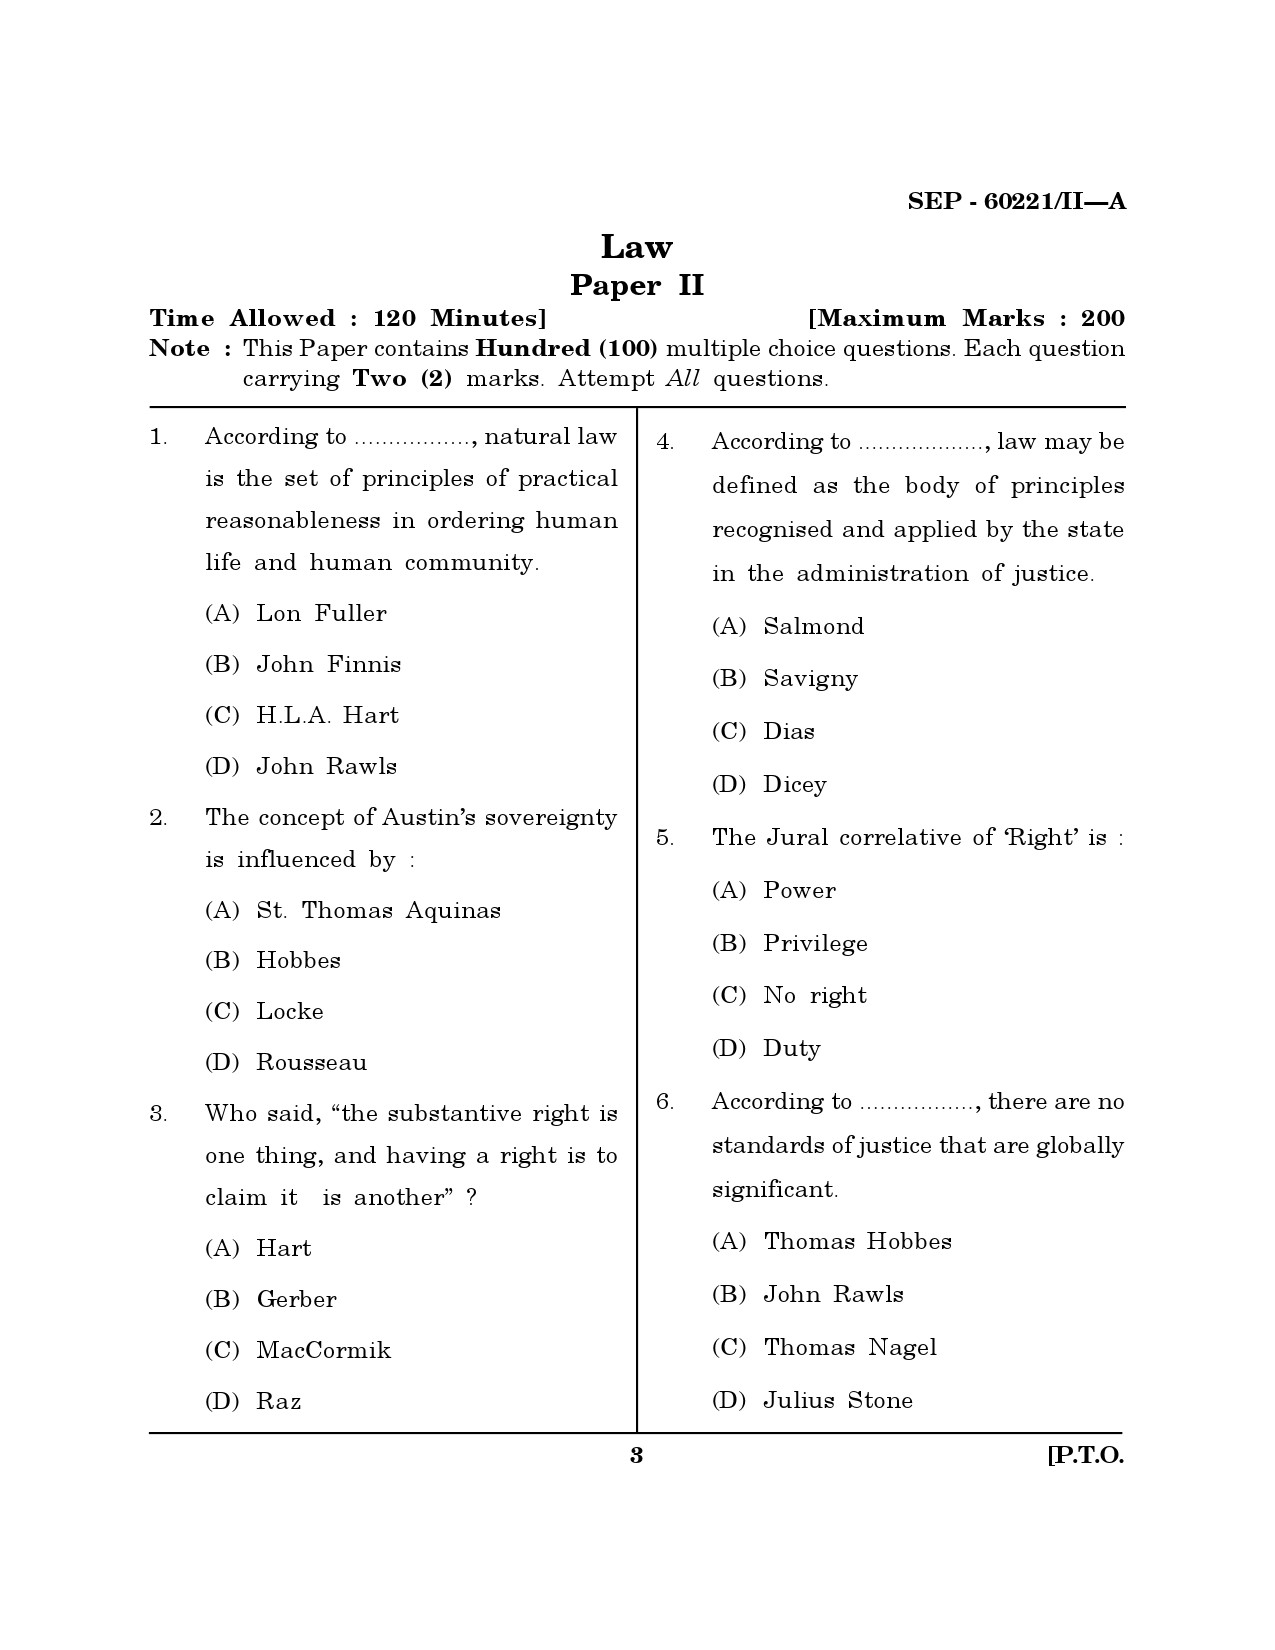 Maharashtra SET Law Exam Question Paper September 2021 2